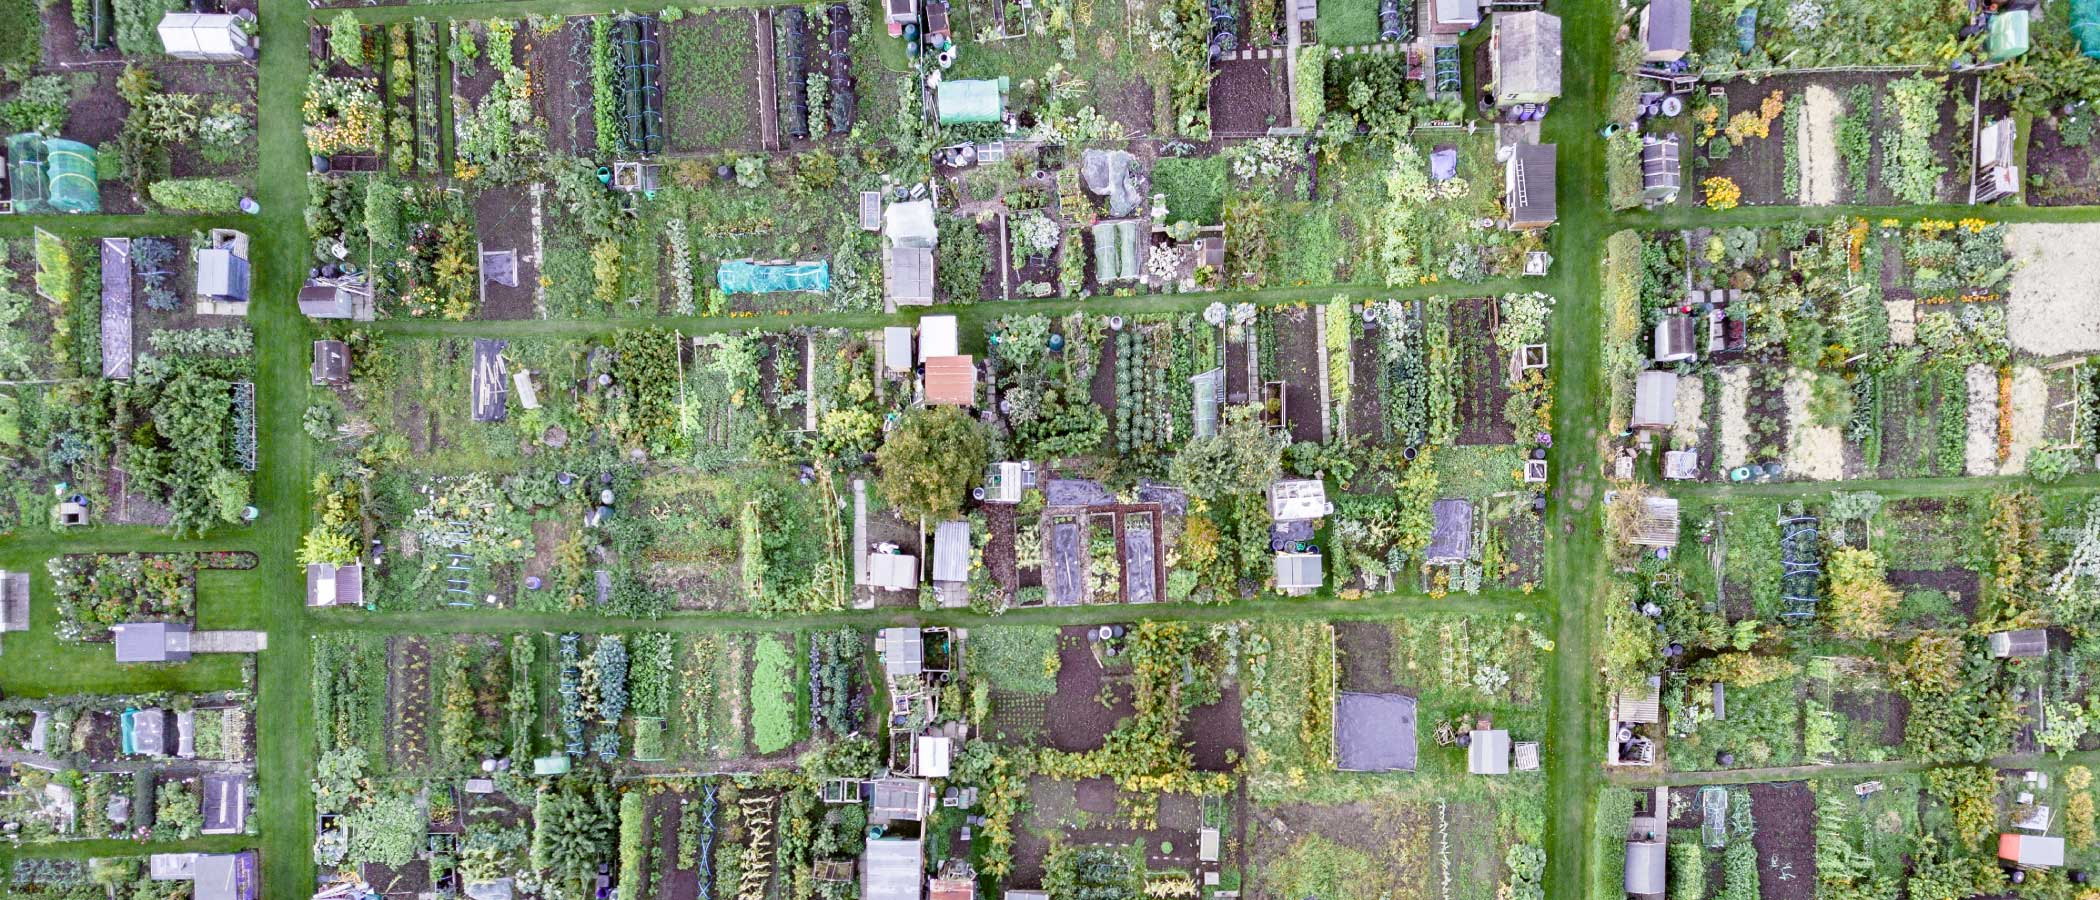 Aerial view of small neighborhood garden plots.